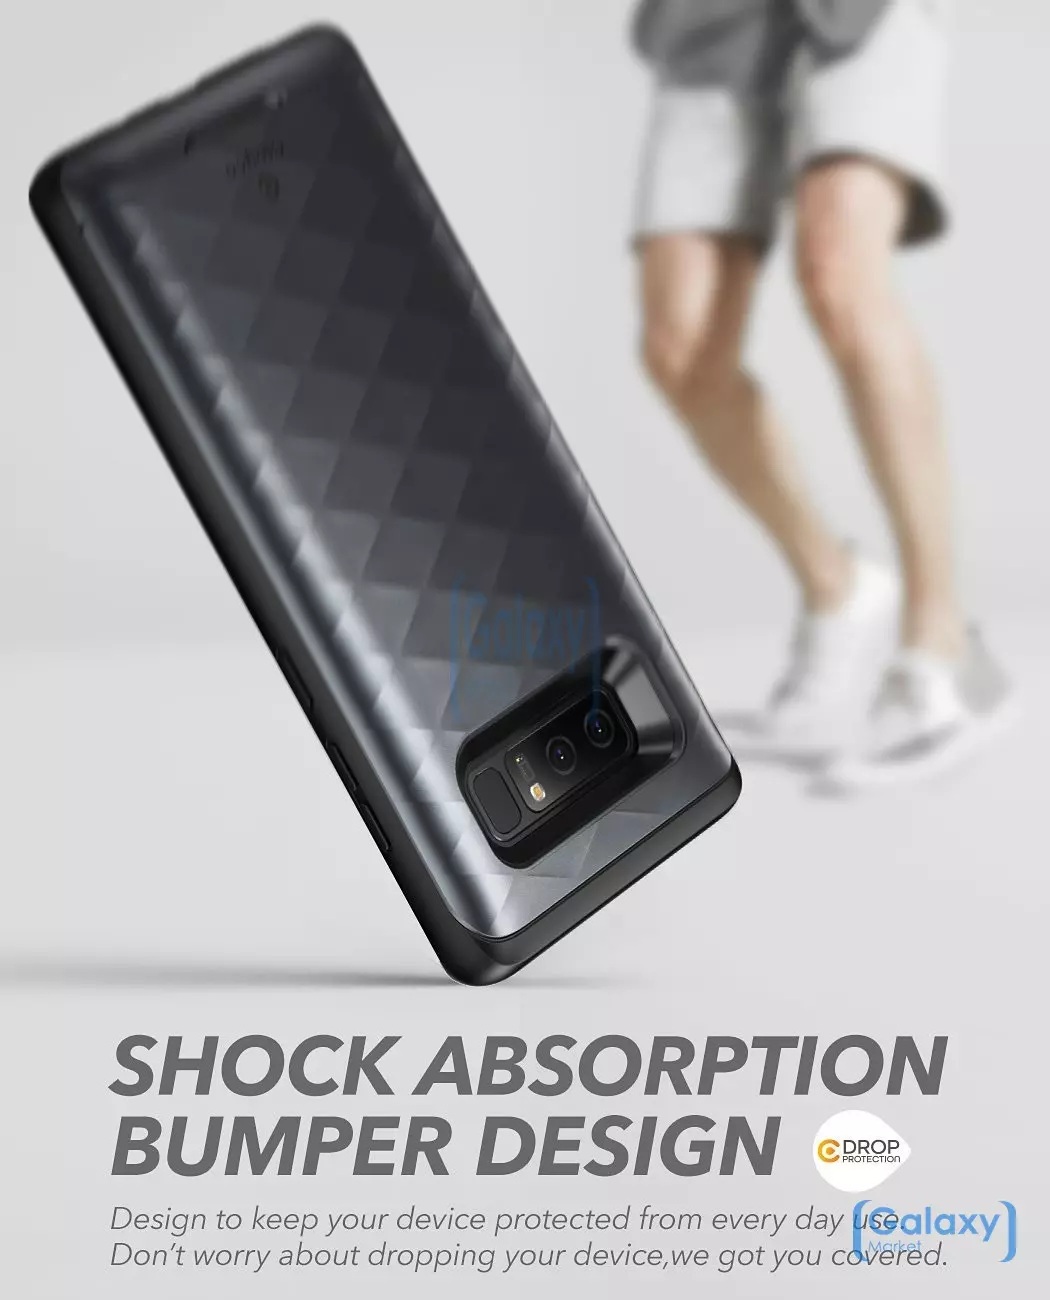 Чехол бампер Clayco Argos Case для Samsung Galaxy Note 8 N950 Black (Черный)